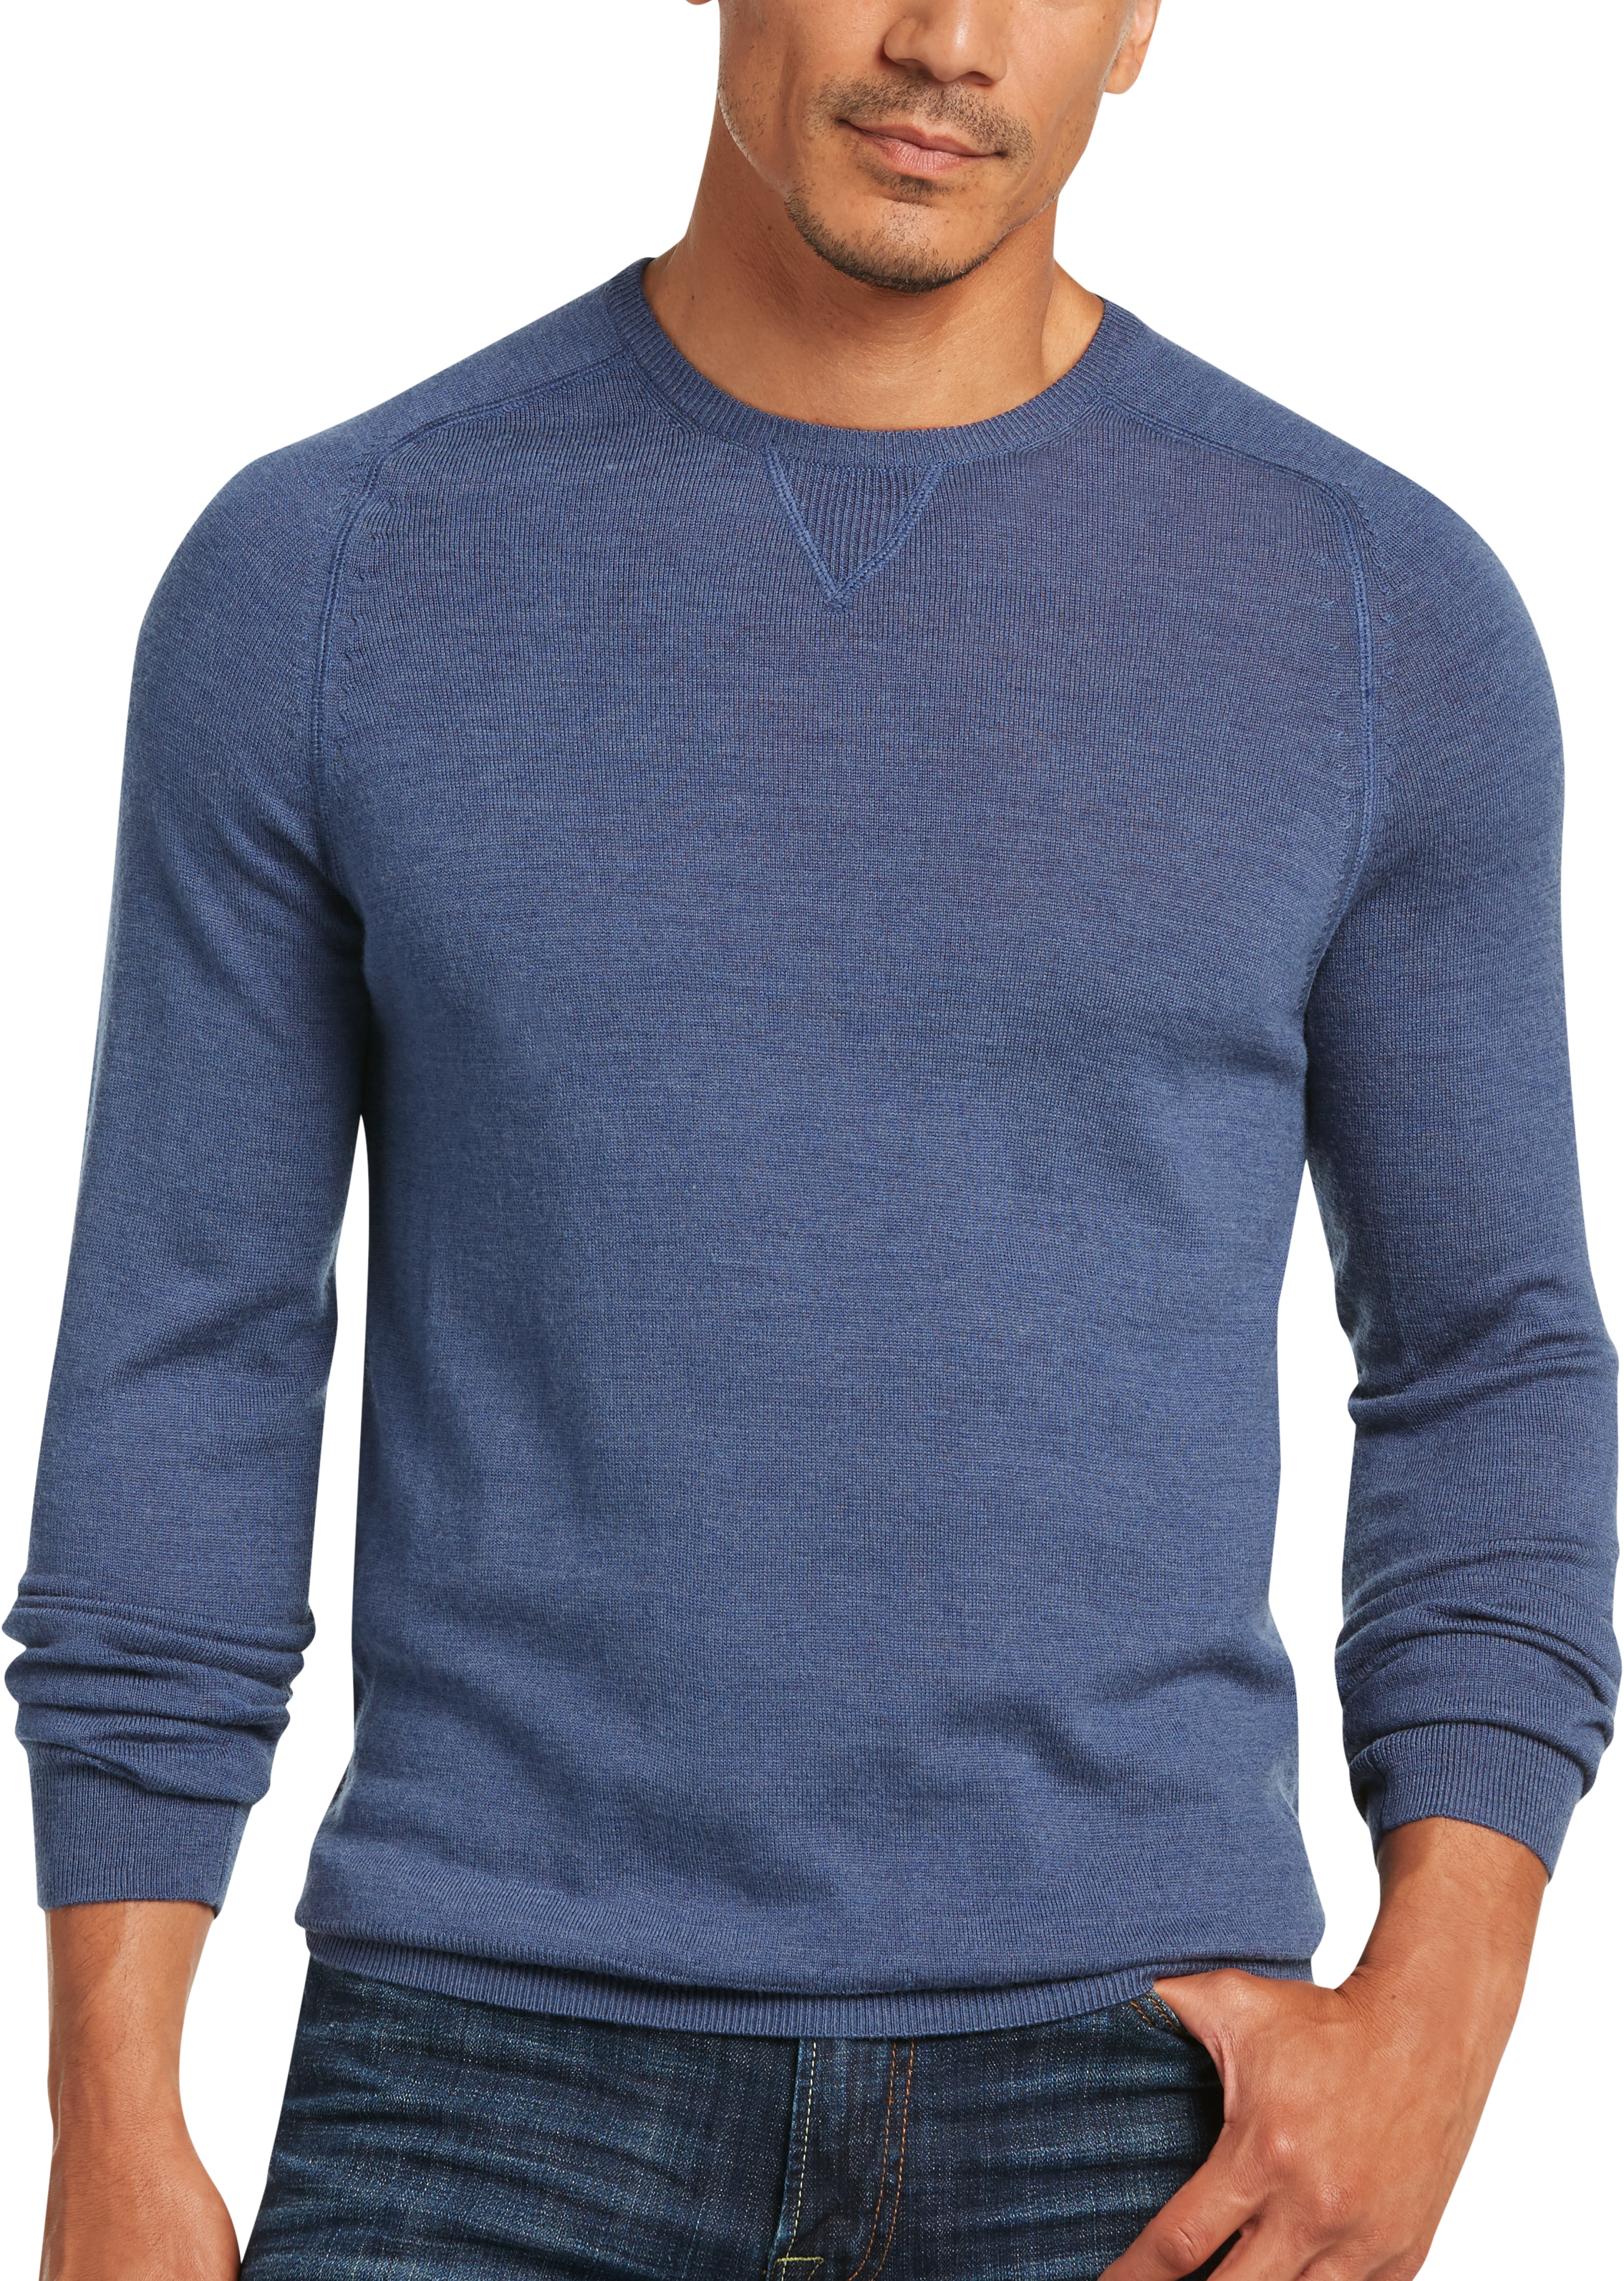 Joseph Abboud Slate Crewneck Sweater - Men's Modern Fit | Men's Wearhouse